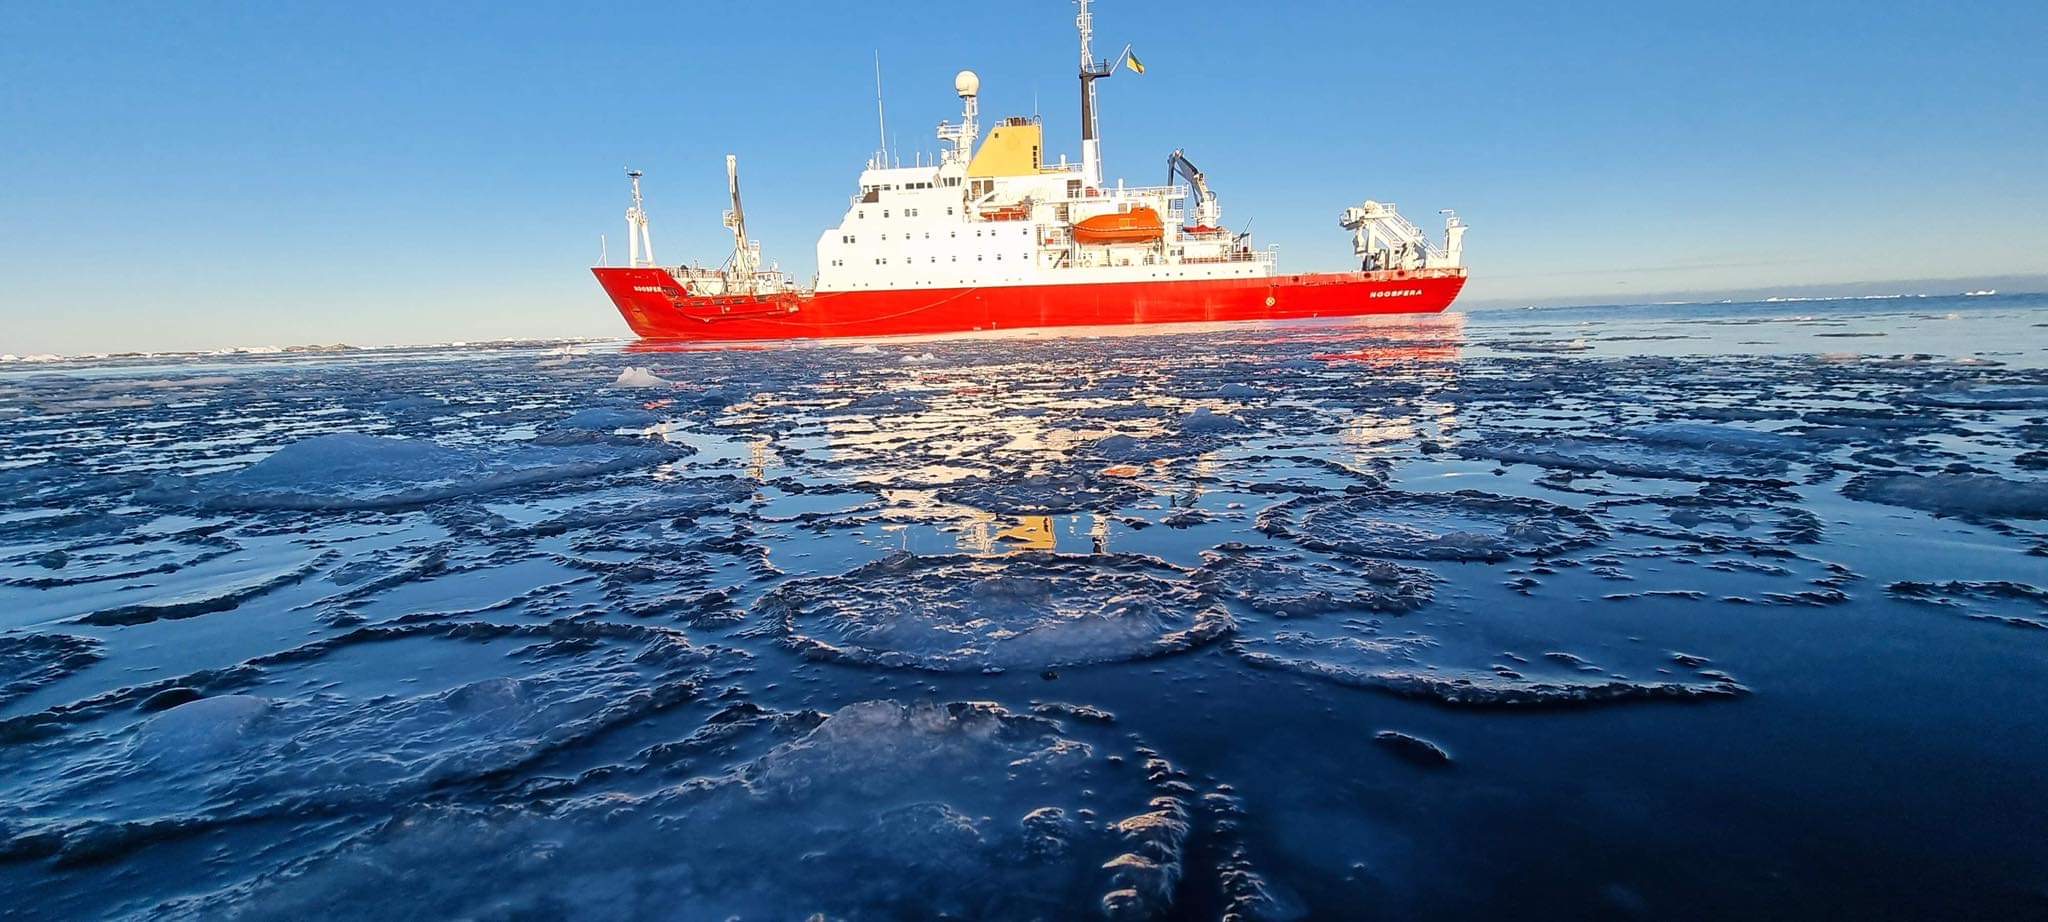 В Антарктике был установлен указатель на Измаил